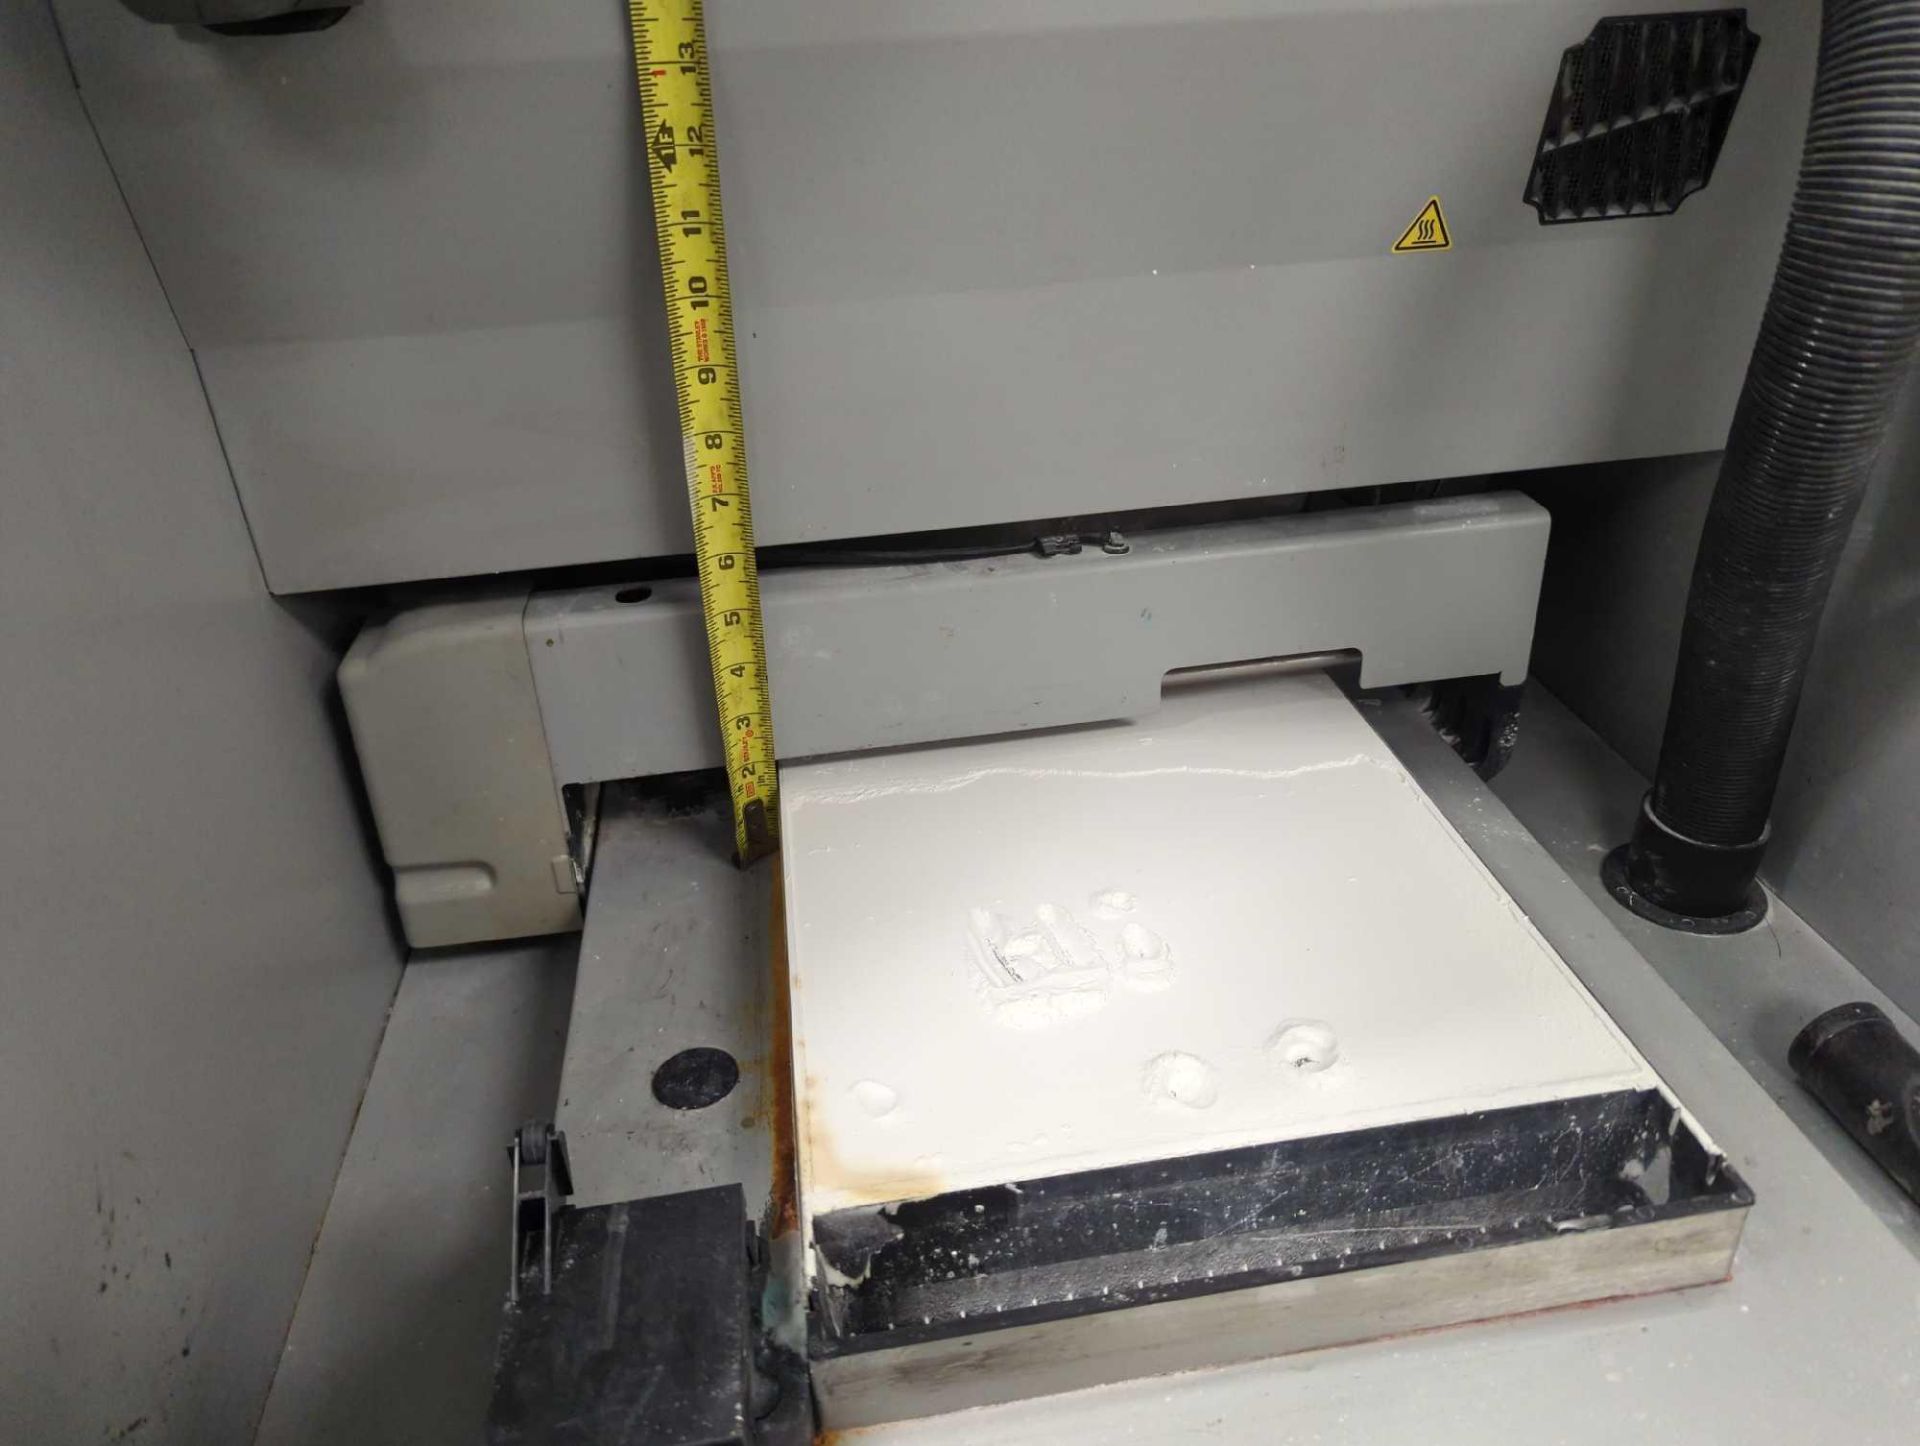 Z Corporation Zprinter 450 Full-Color 3D Printer - Image 16 of 18